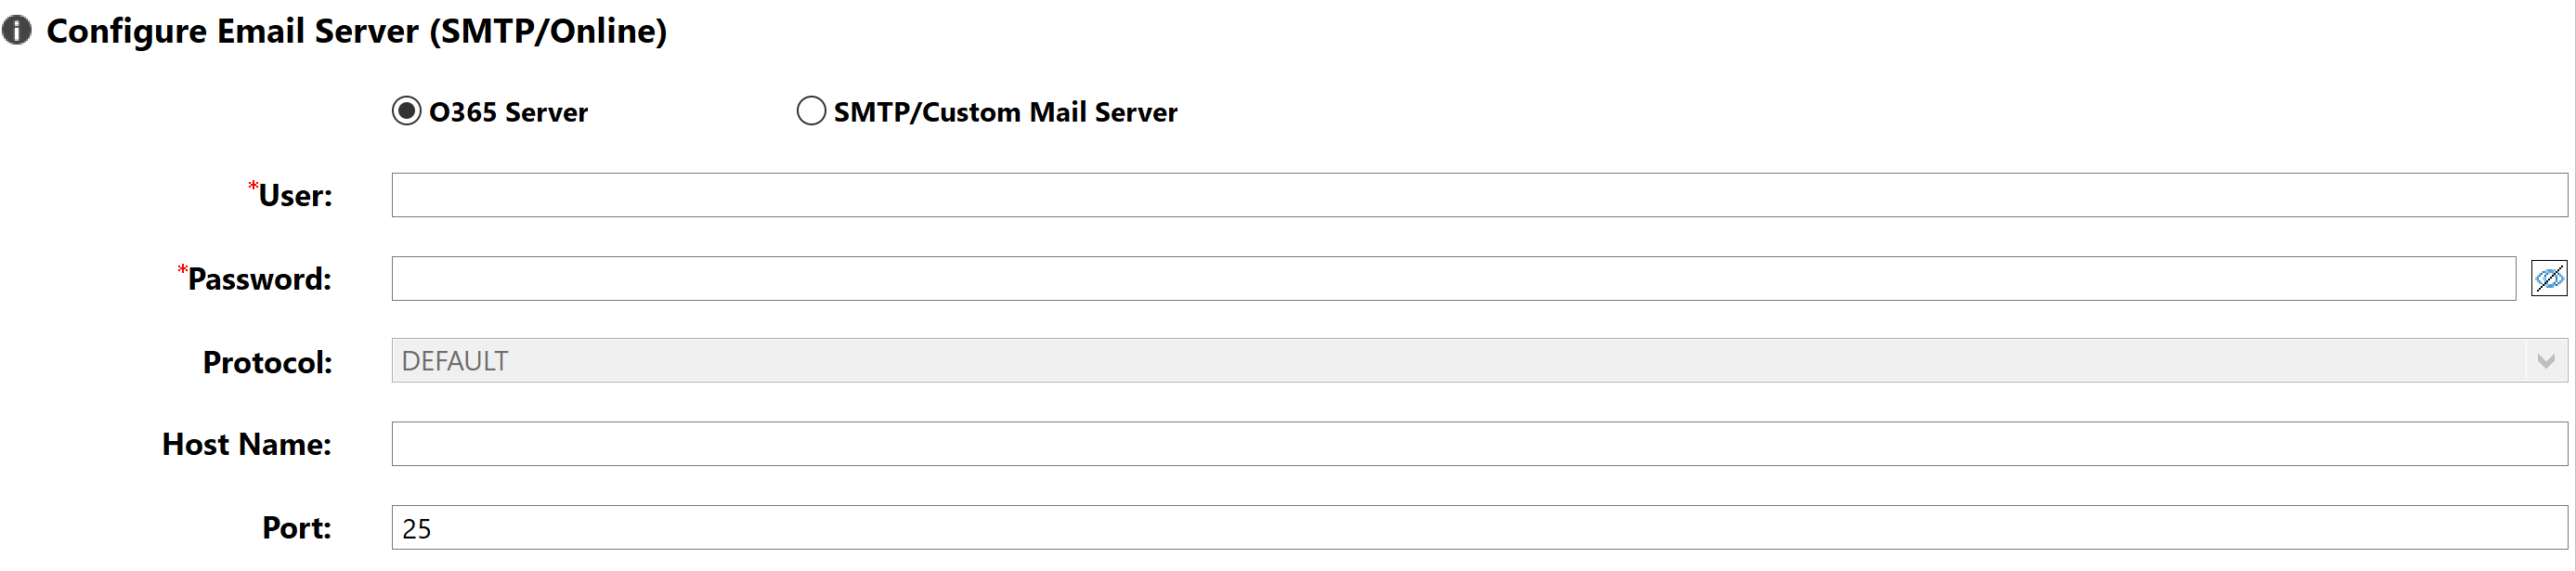 configure email Server 1